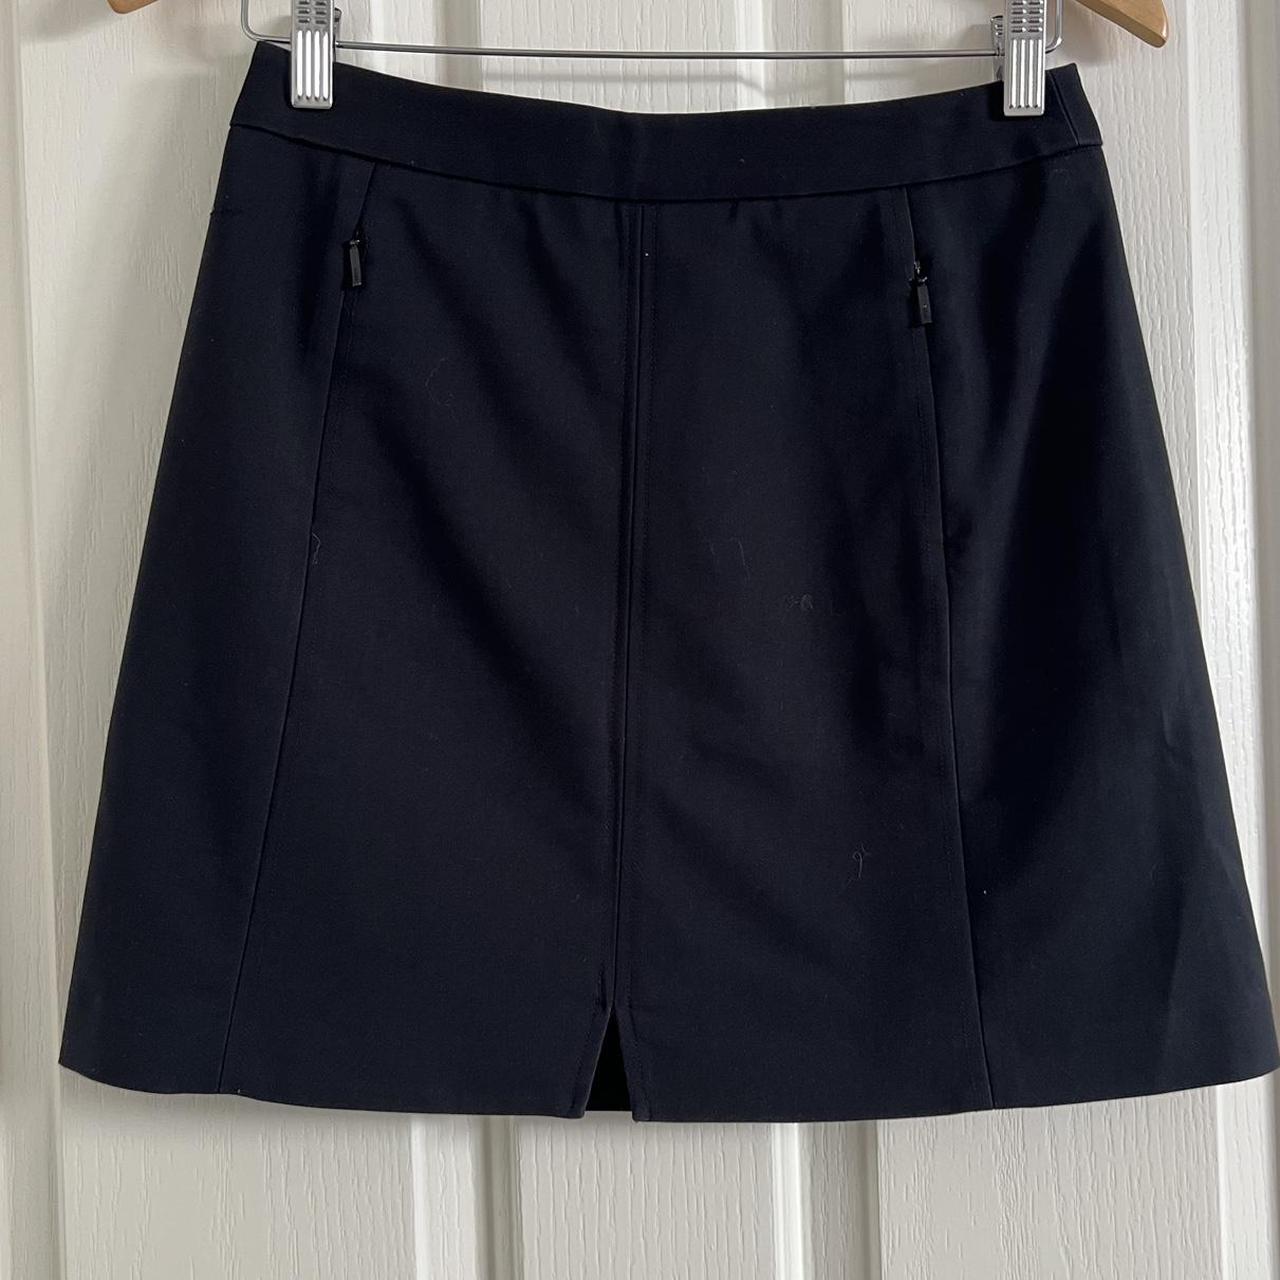 SABA black suit mini skirt. Fully lined, zip... - Depop